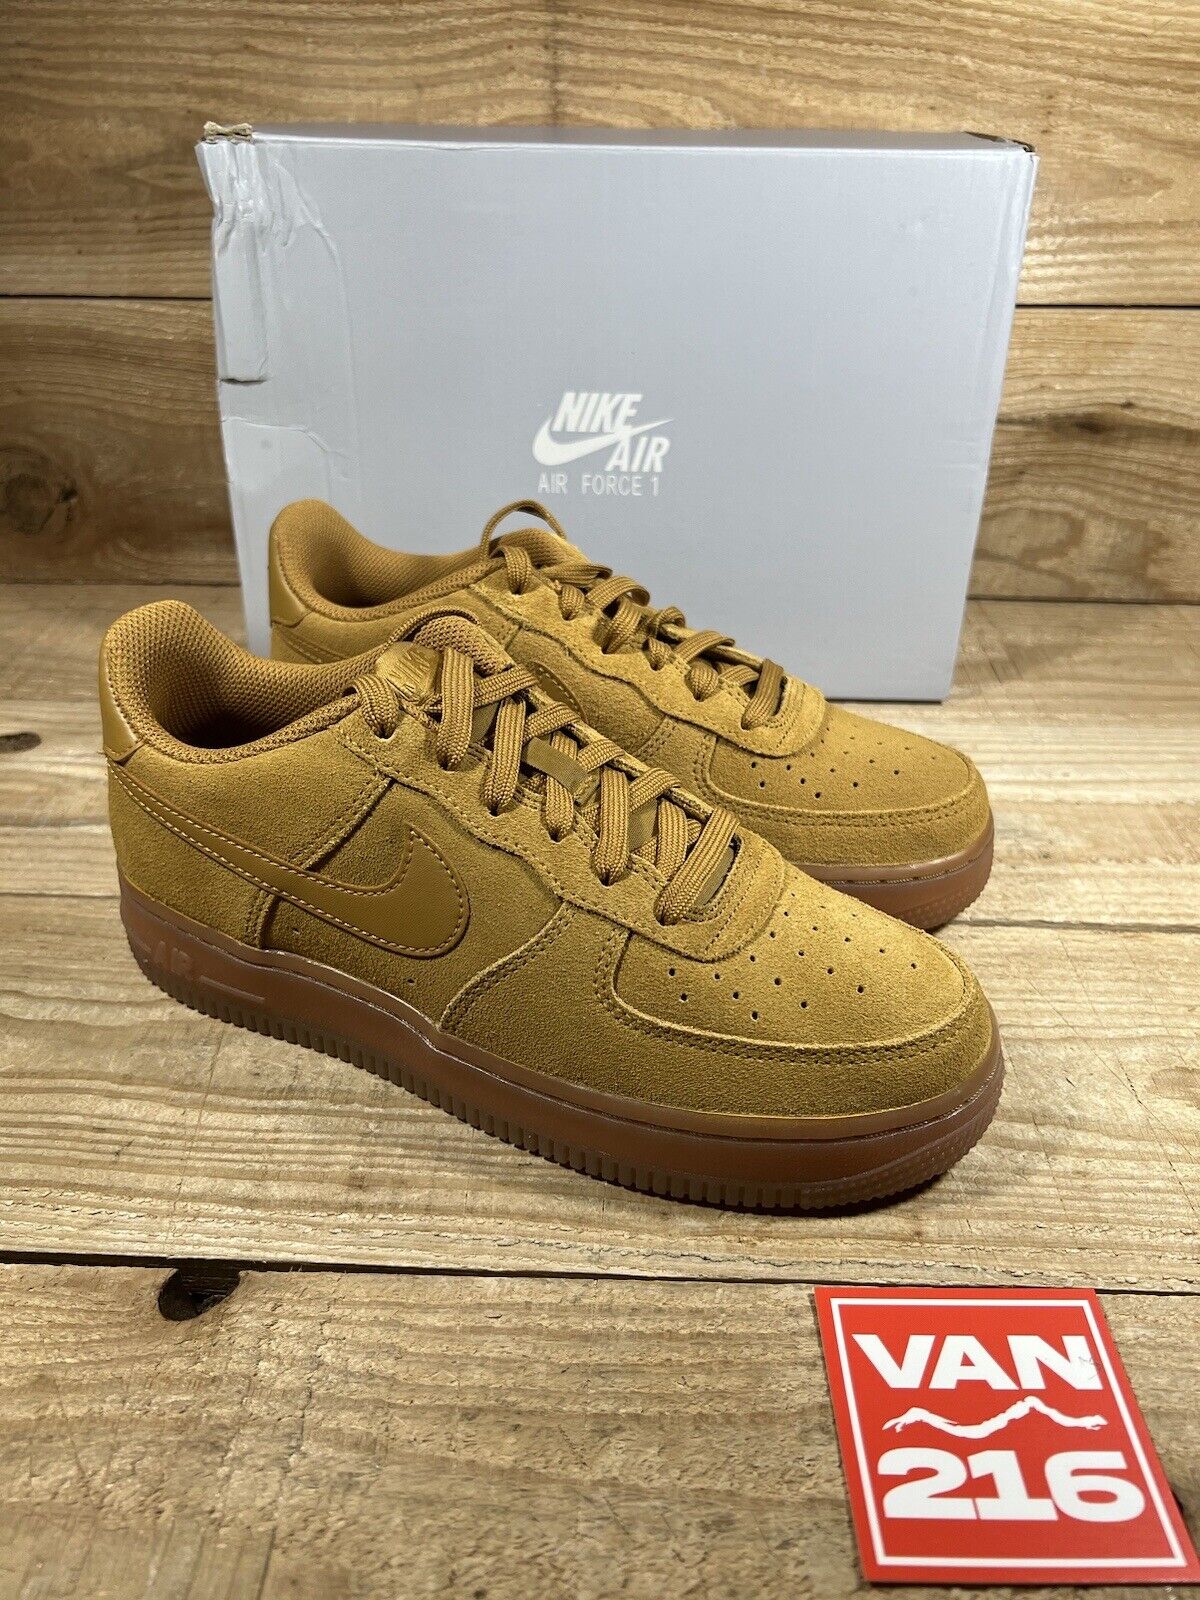 Nike Air Force 1 LV8 3 Big Kids' Shoes in Brown, Size: 6.5Y | BQ5485-700